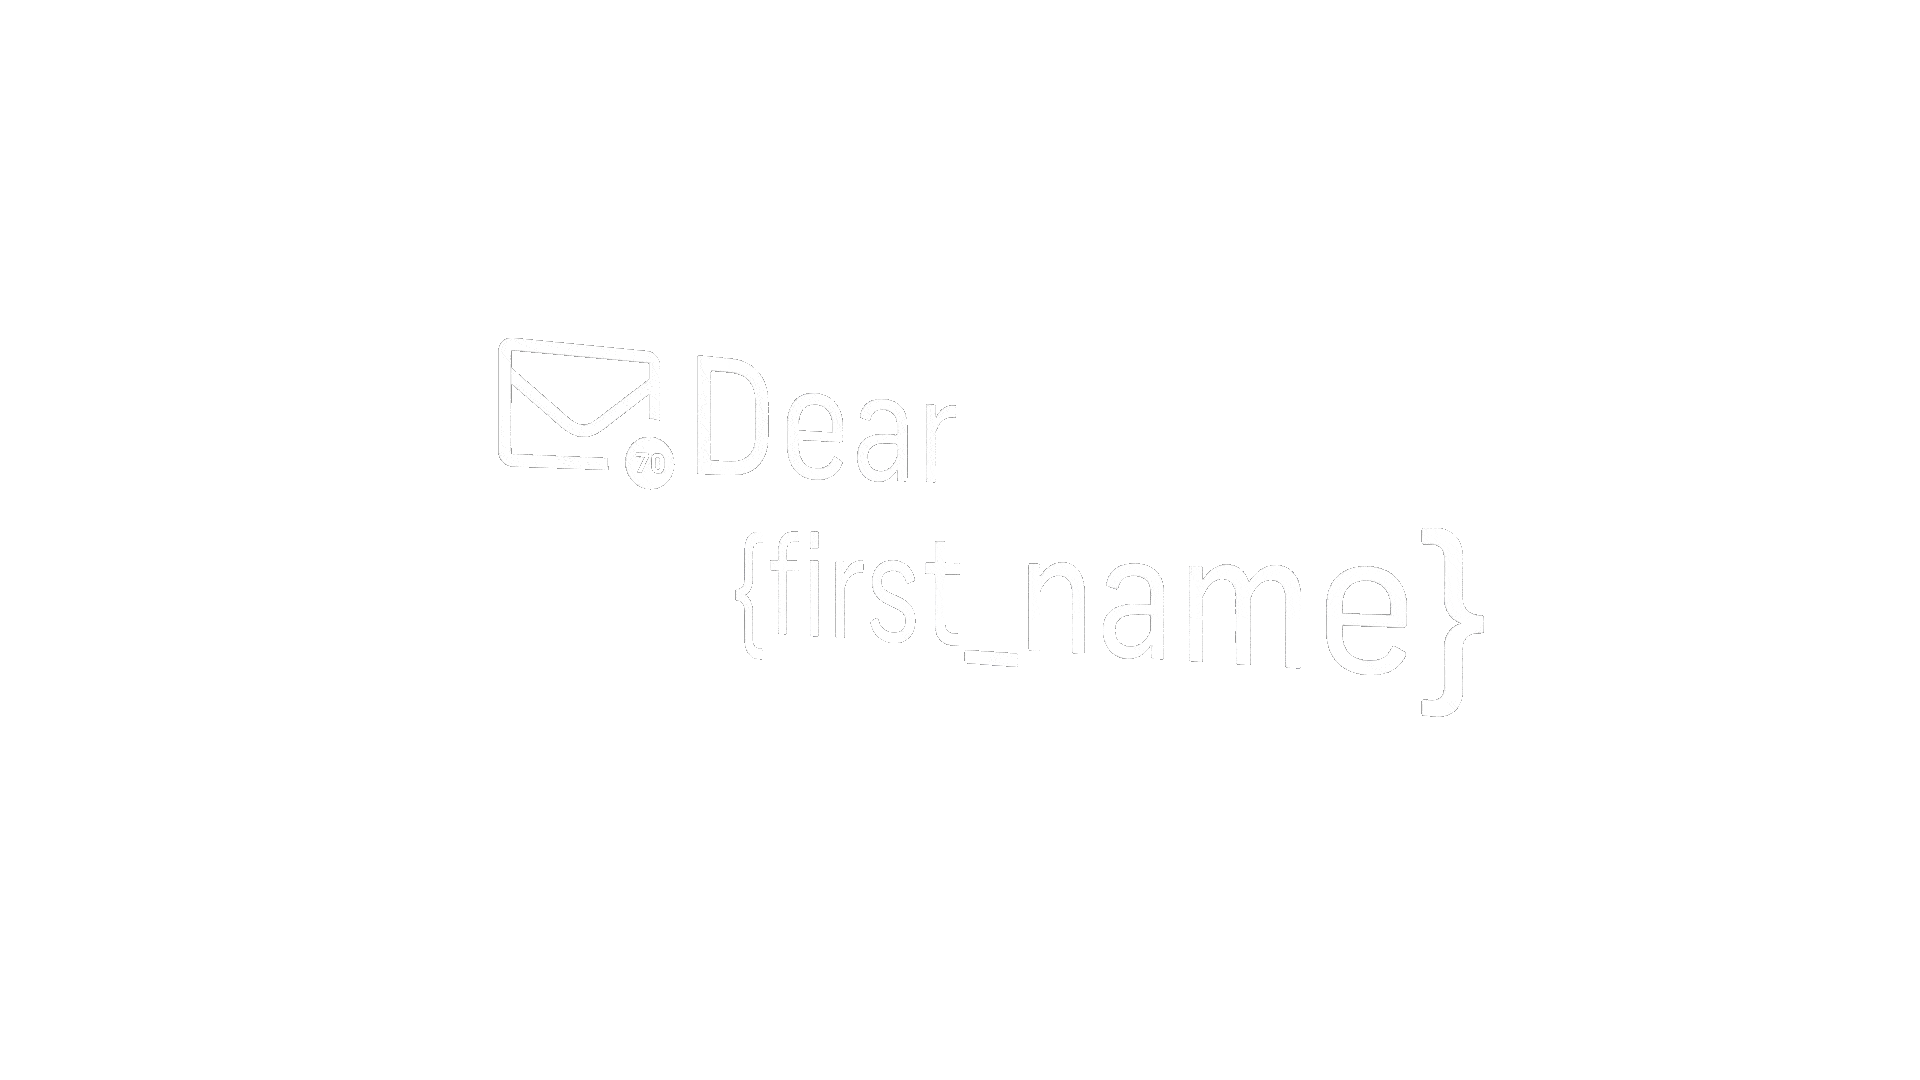 Dear First Name animated logo